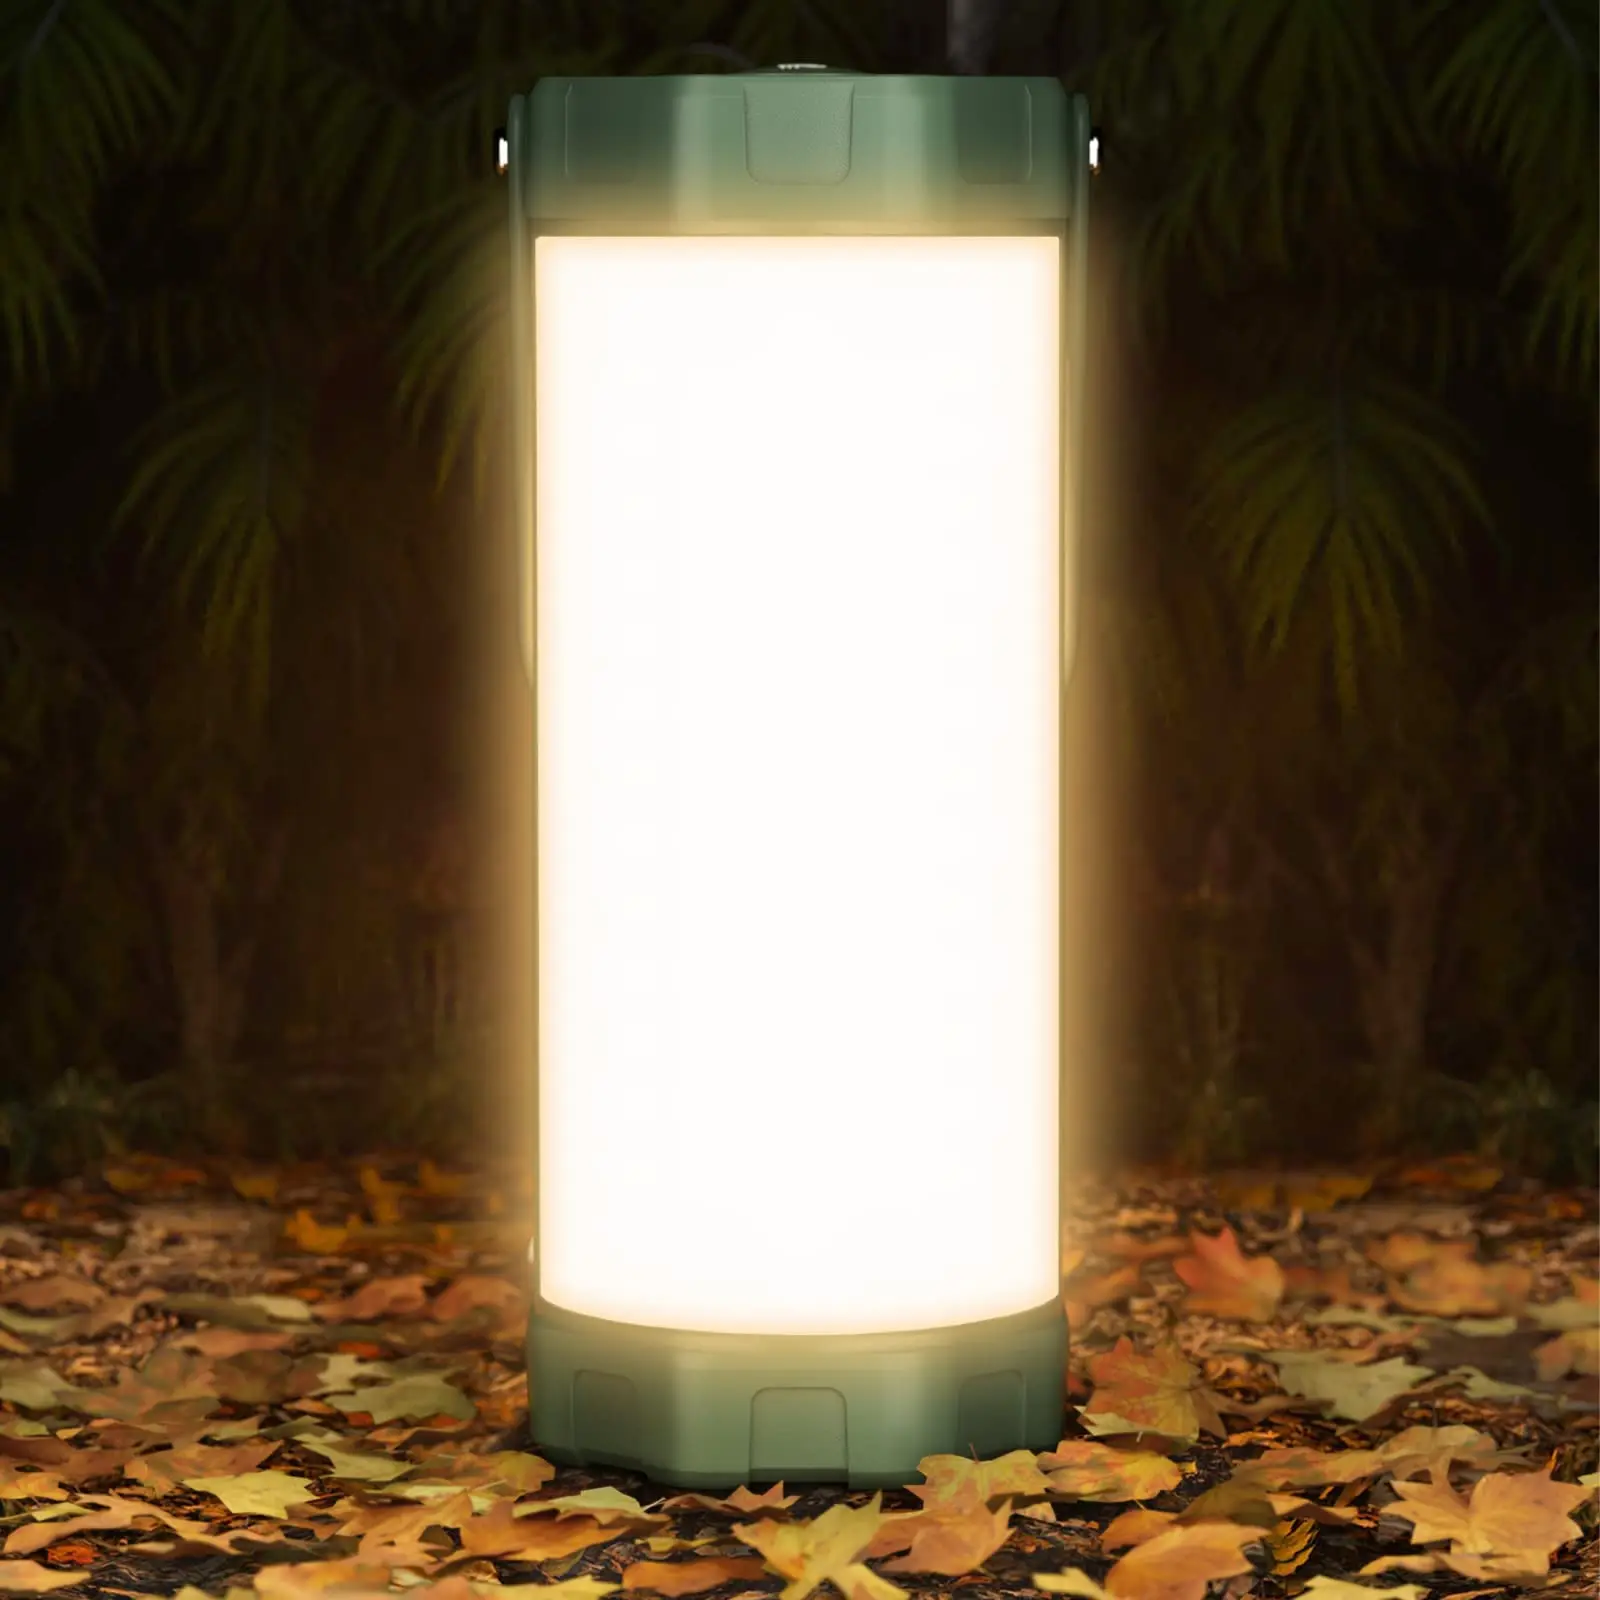 https://ae01.alicdn.com/kf/Sd74ef5d8451749608397faf043d1cf89H/106LED-Survival-Camping-Lantern-Portable-Power-Bank-Outdoor-Lighting-Flashlight-Tent-Light-Rechargeable-Emergency-Equipment-Lamp.jpg